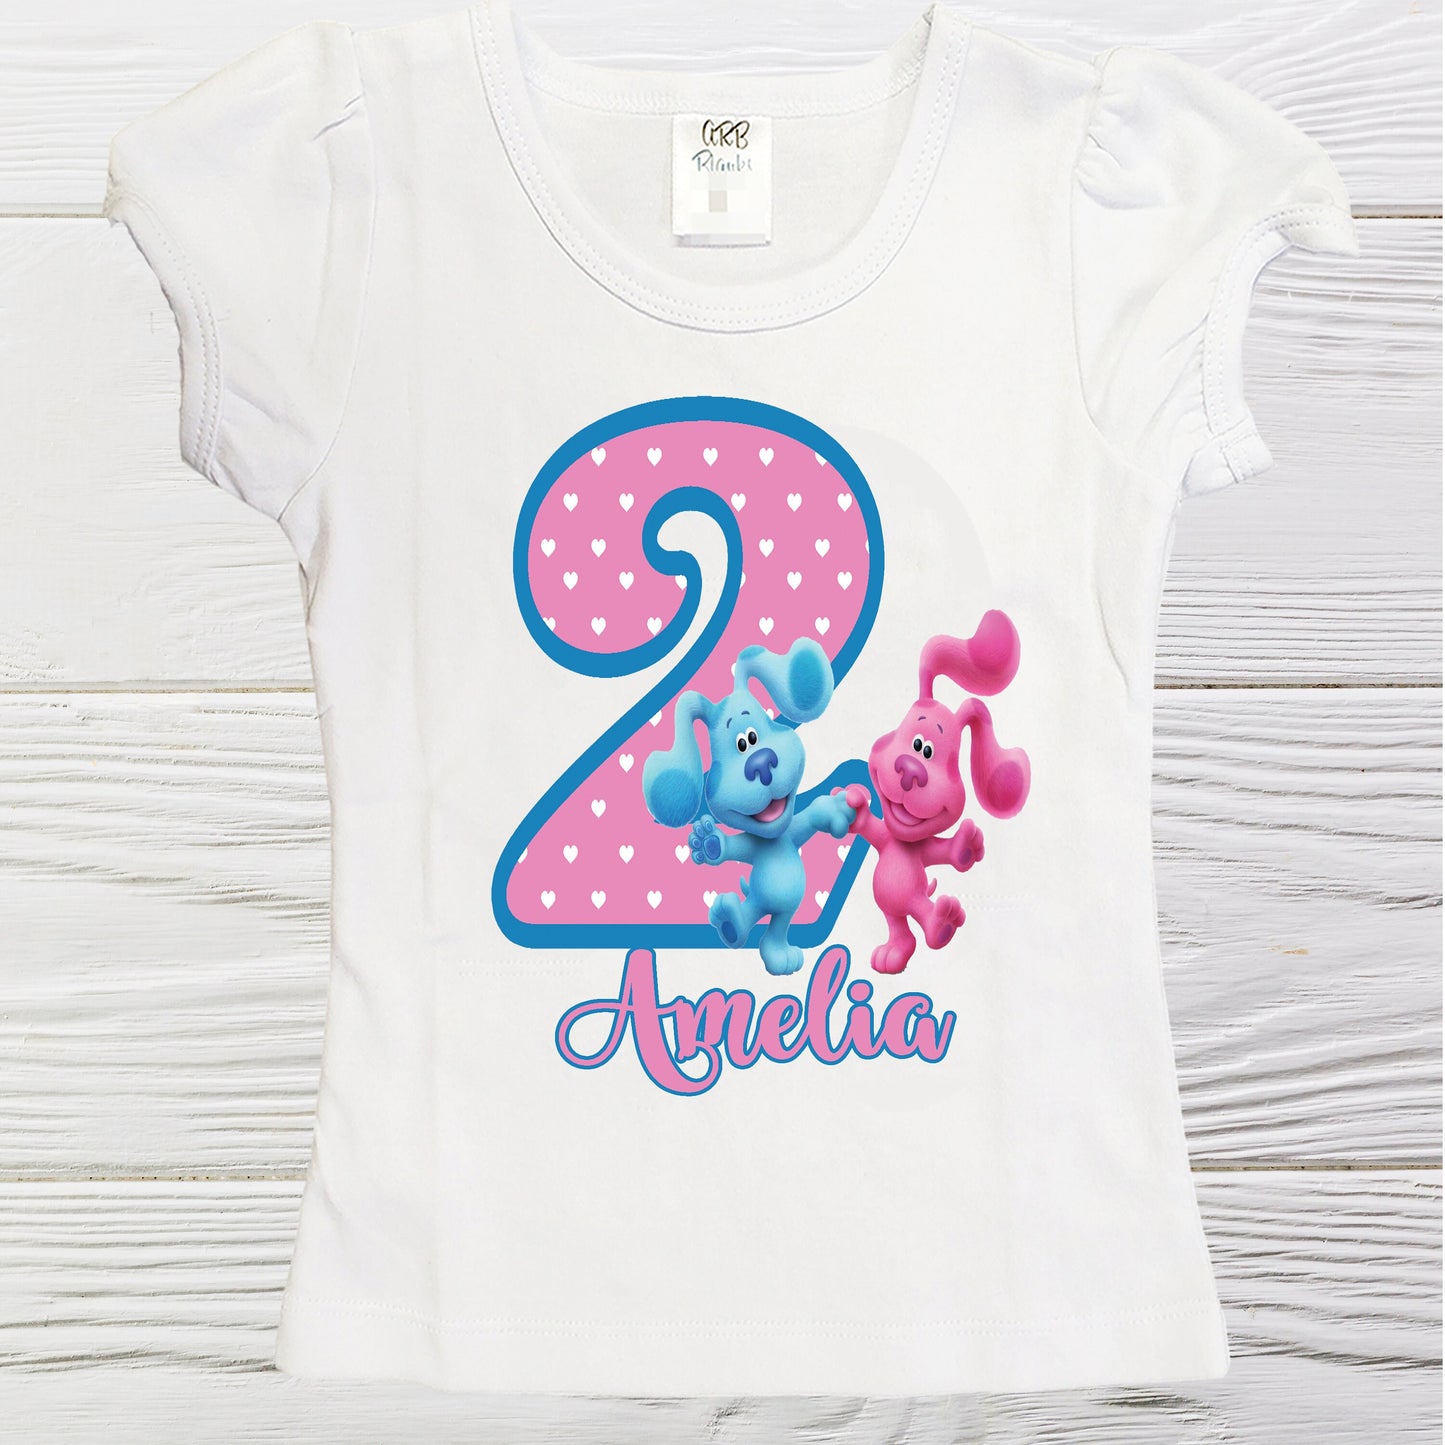 Blues Clues Birthday Shirt | Blues Clues  Girls Shirt | Personalized Blues Clues Shirt | Kids Birthday Shirt |Blues Clues | Girls shirts